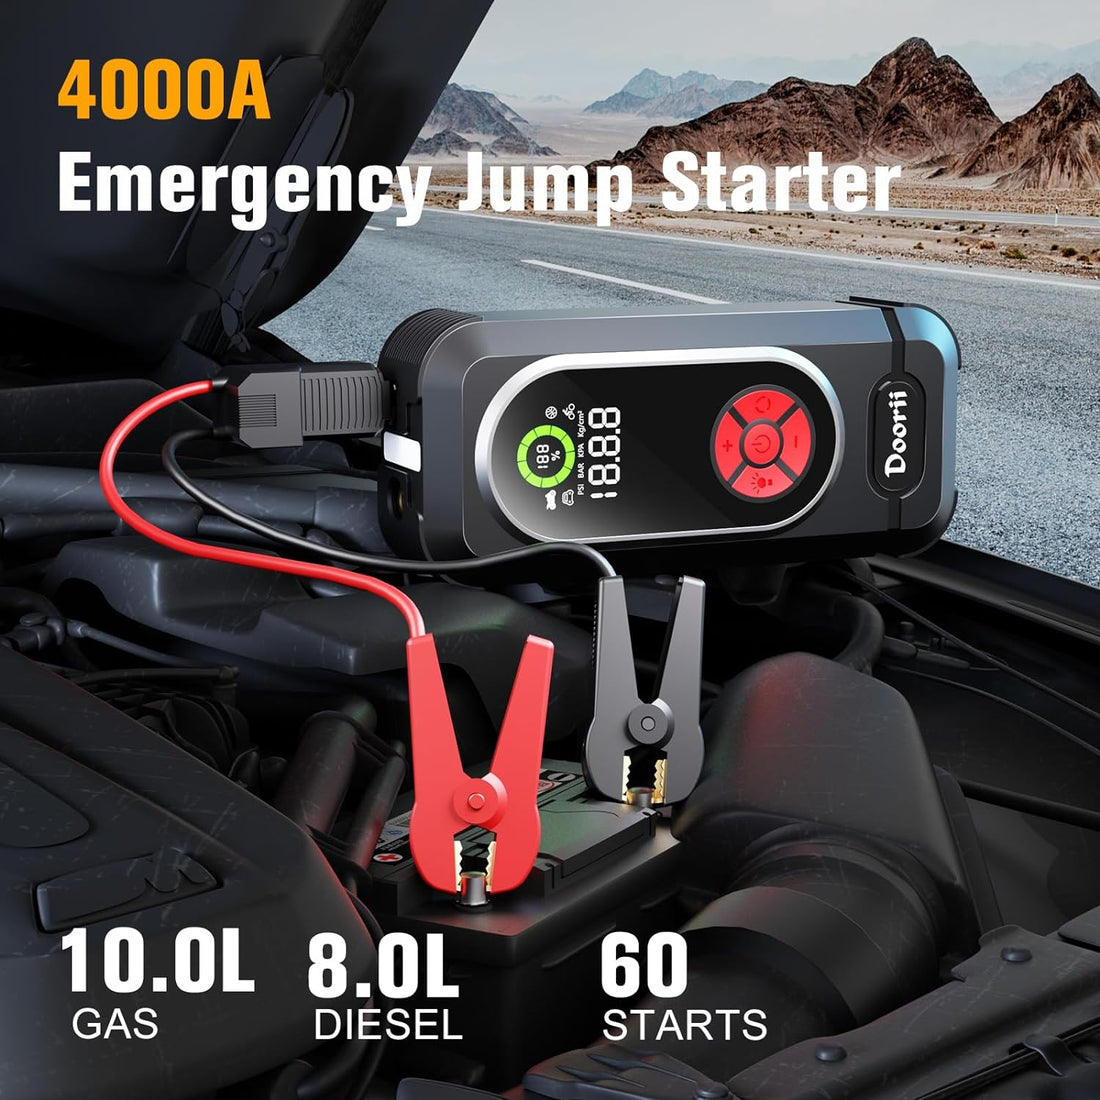 Doorii Q10 Car Jump Starter with Air Compressor, 4000A 150PSI Jump Starter Battery Pack (10.0L Gas/8.0L Diesel) Digital Tire Inflator, 12V Car Battery Booster Portable Jump Box with Air Pump